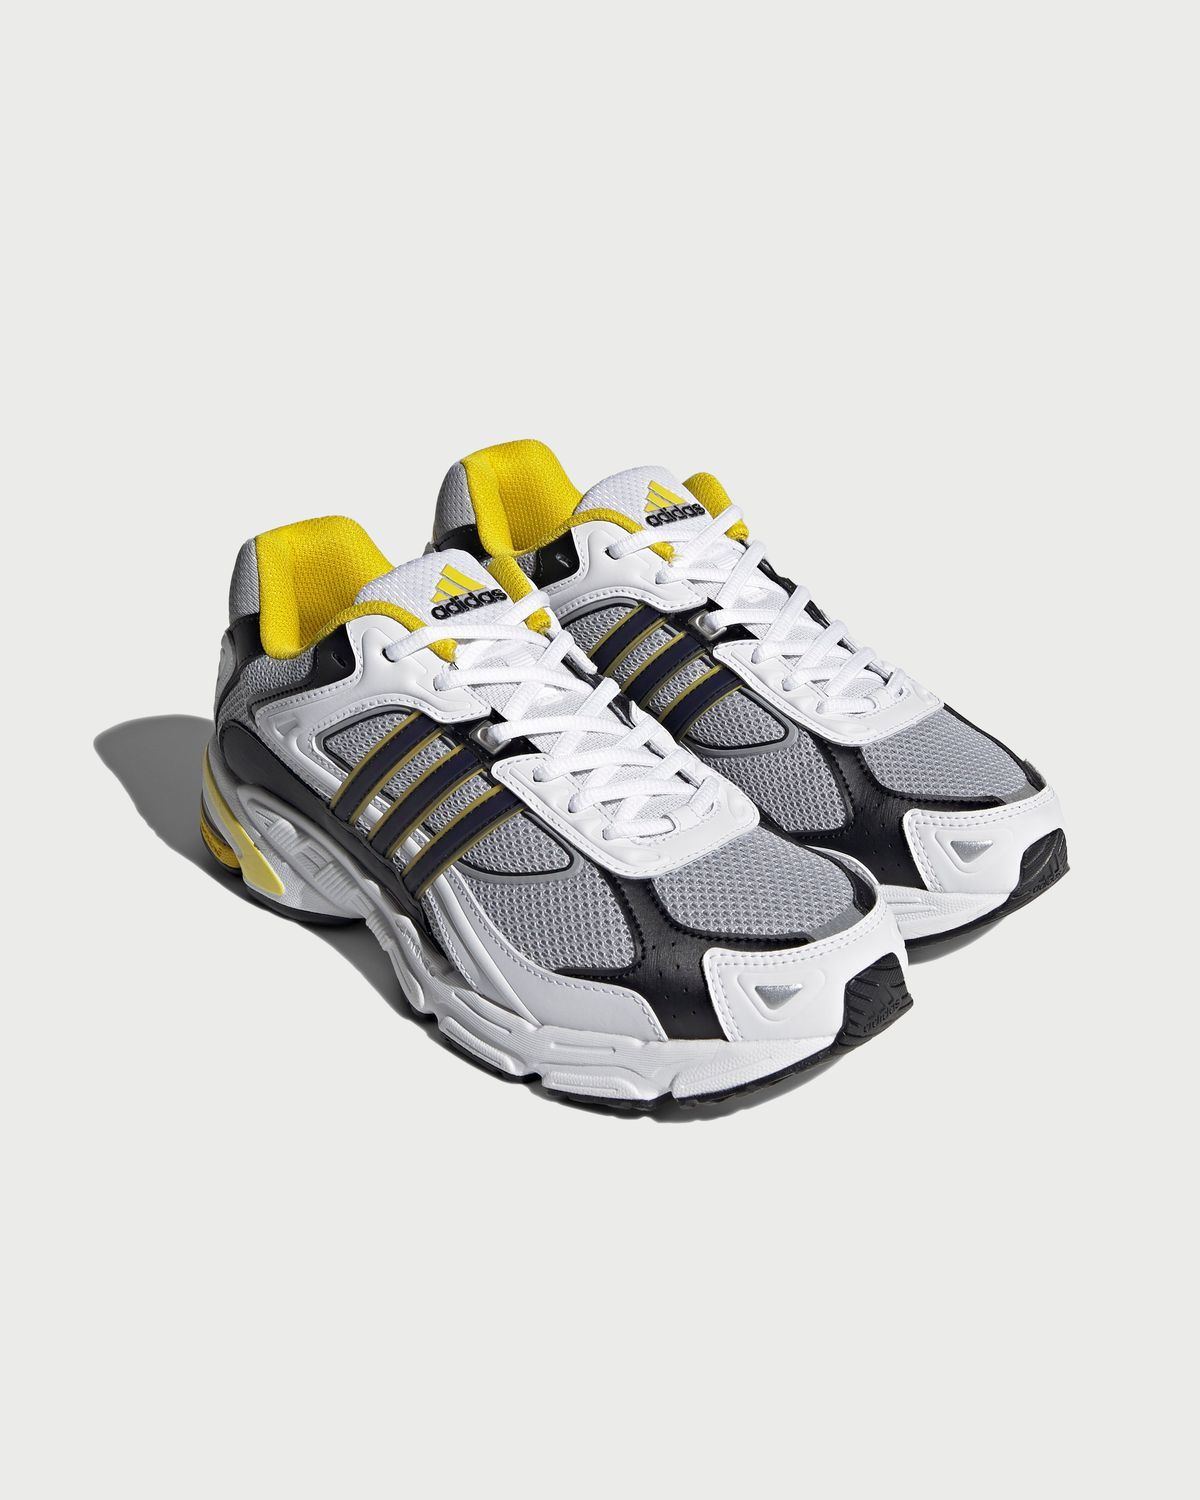 Adidas – Response CL White/Yellow - Low Top Sneakers - White - Image 2